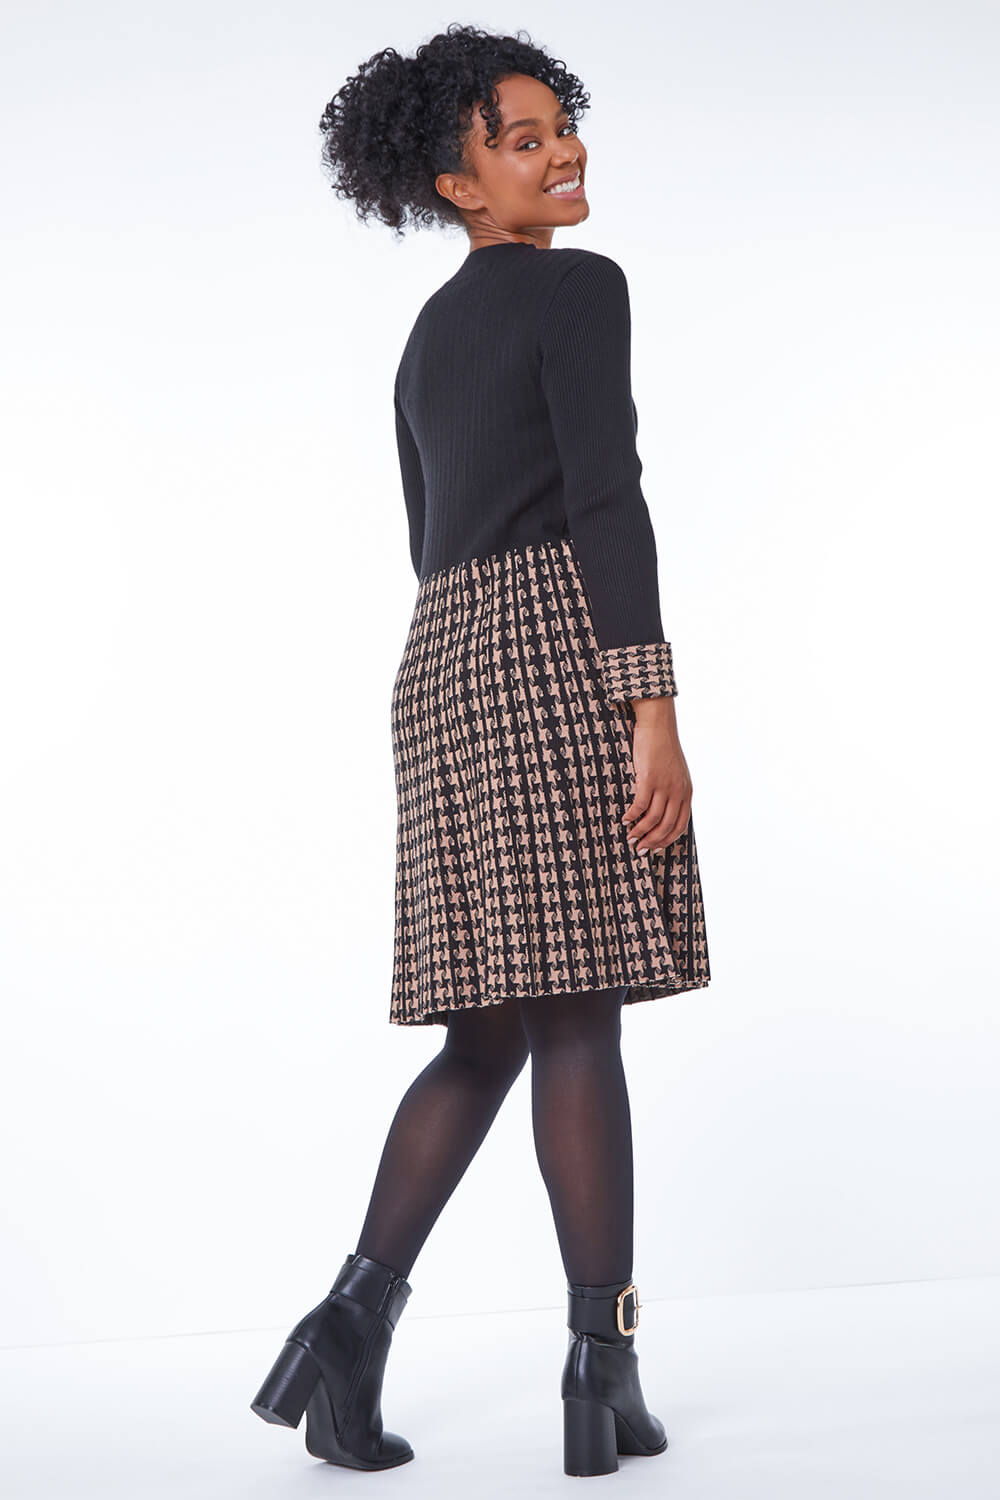 Black Petite Contrast Knitted Jumper Dress, Image 3 of 5